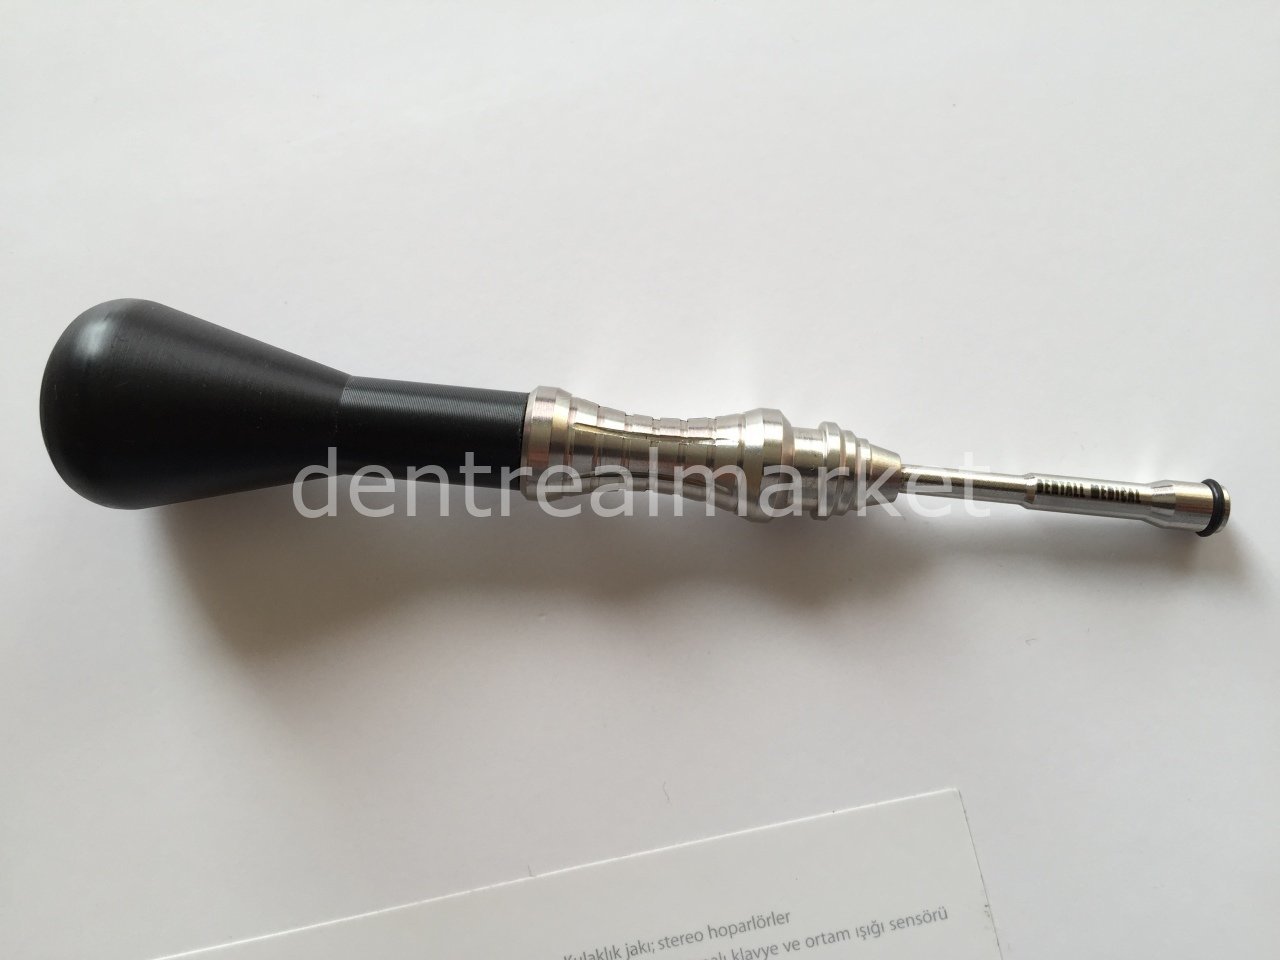 DentrealStore - Dentreal Orthodontic Mini Screw Handpiece